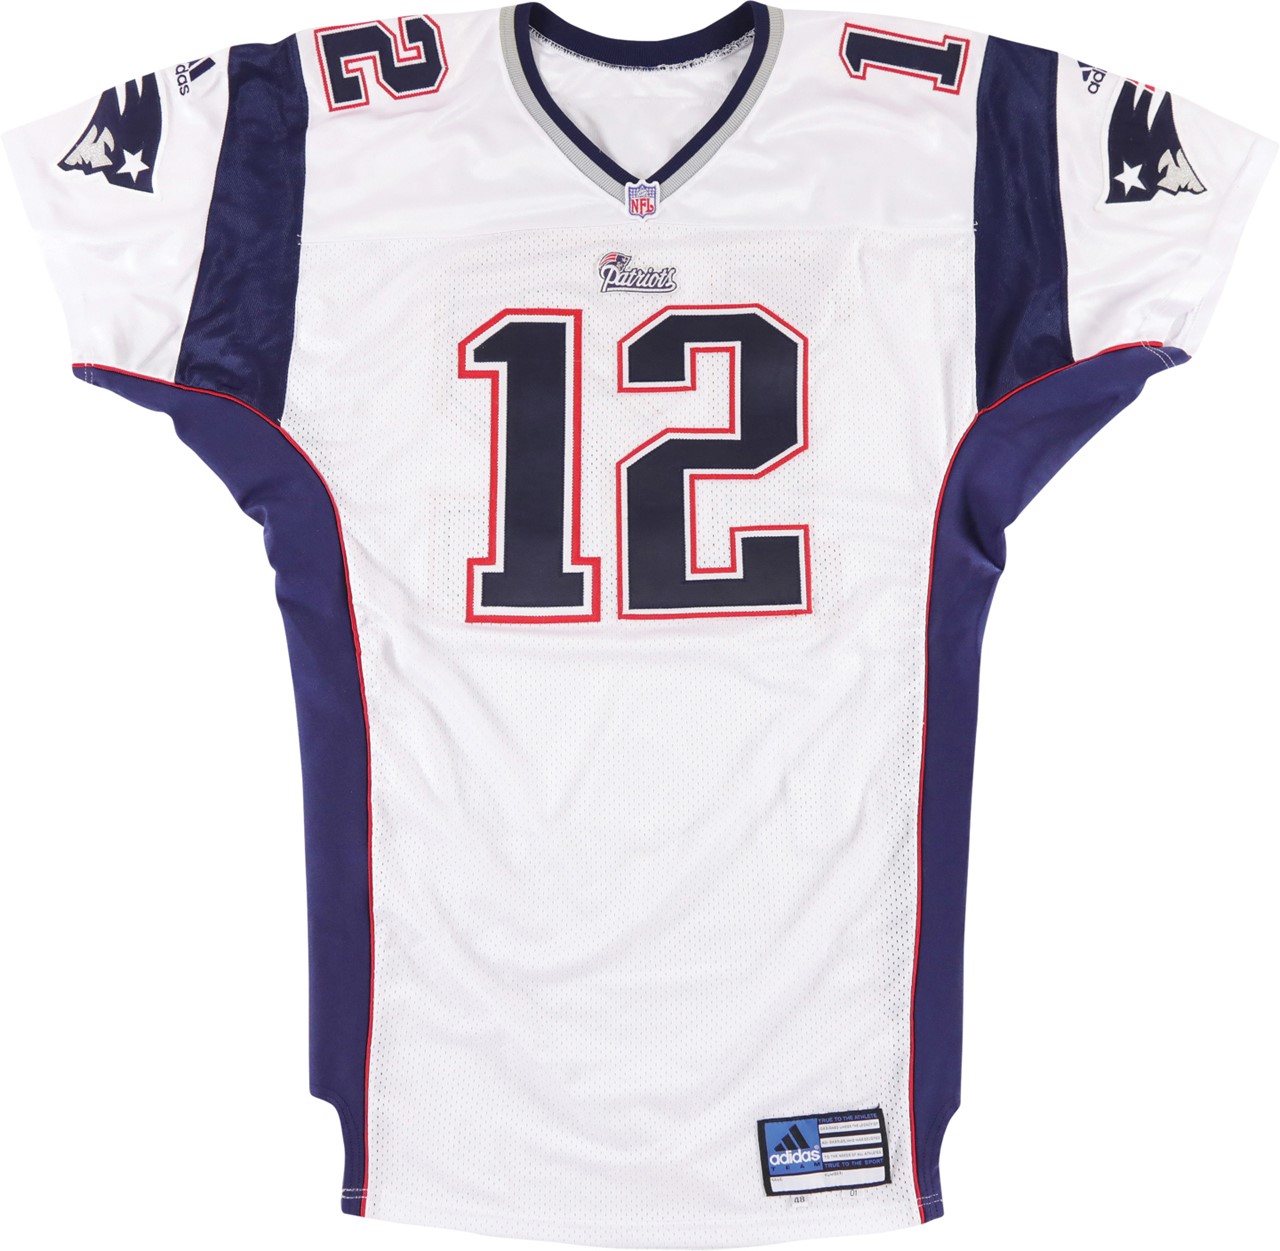 - 2001 Tom Brady New England Patriots Game Jersey - Brady's First Championship Year